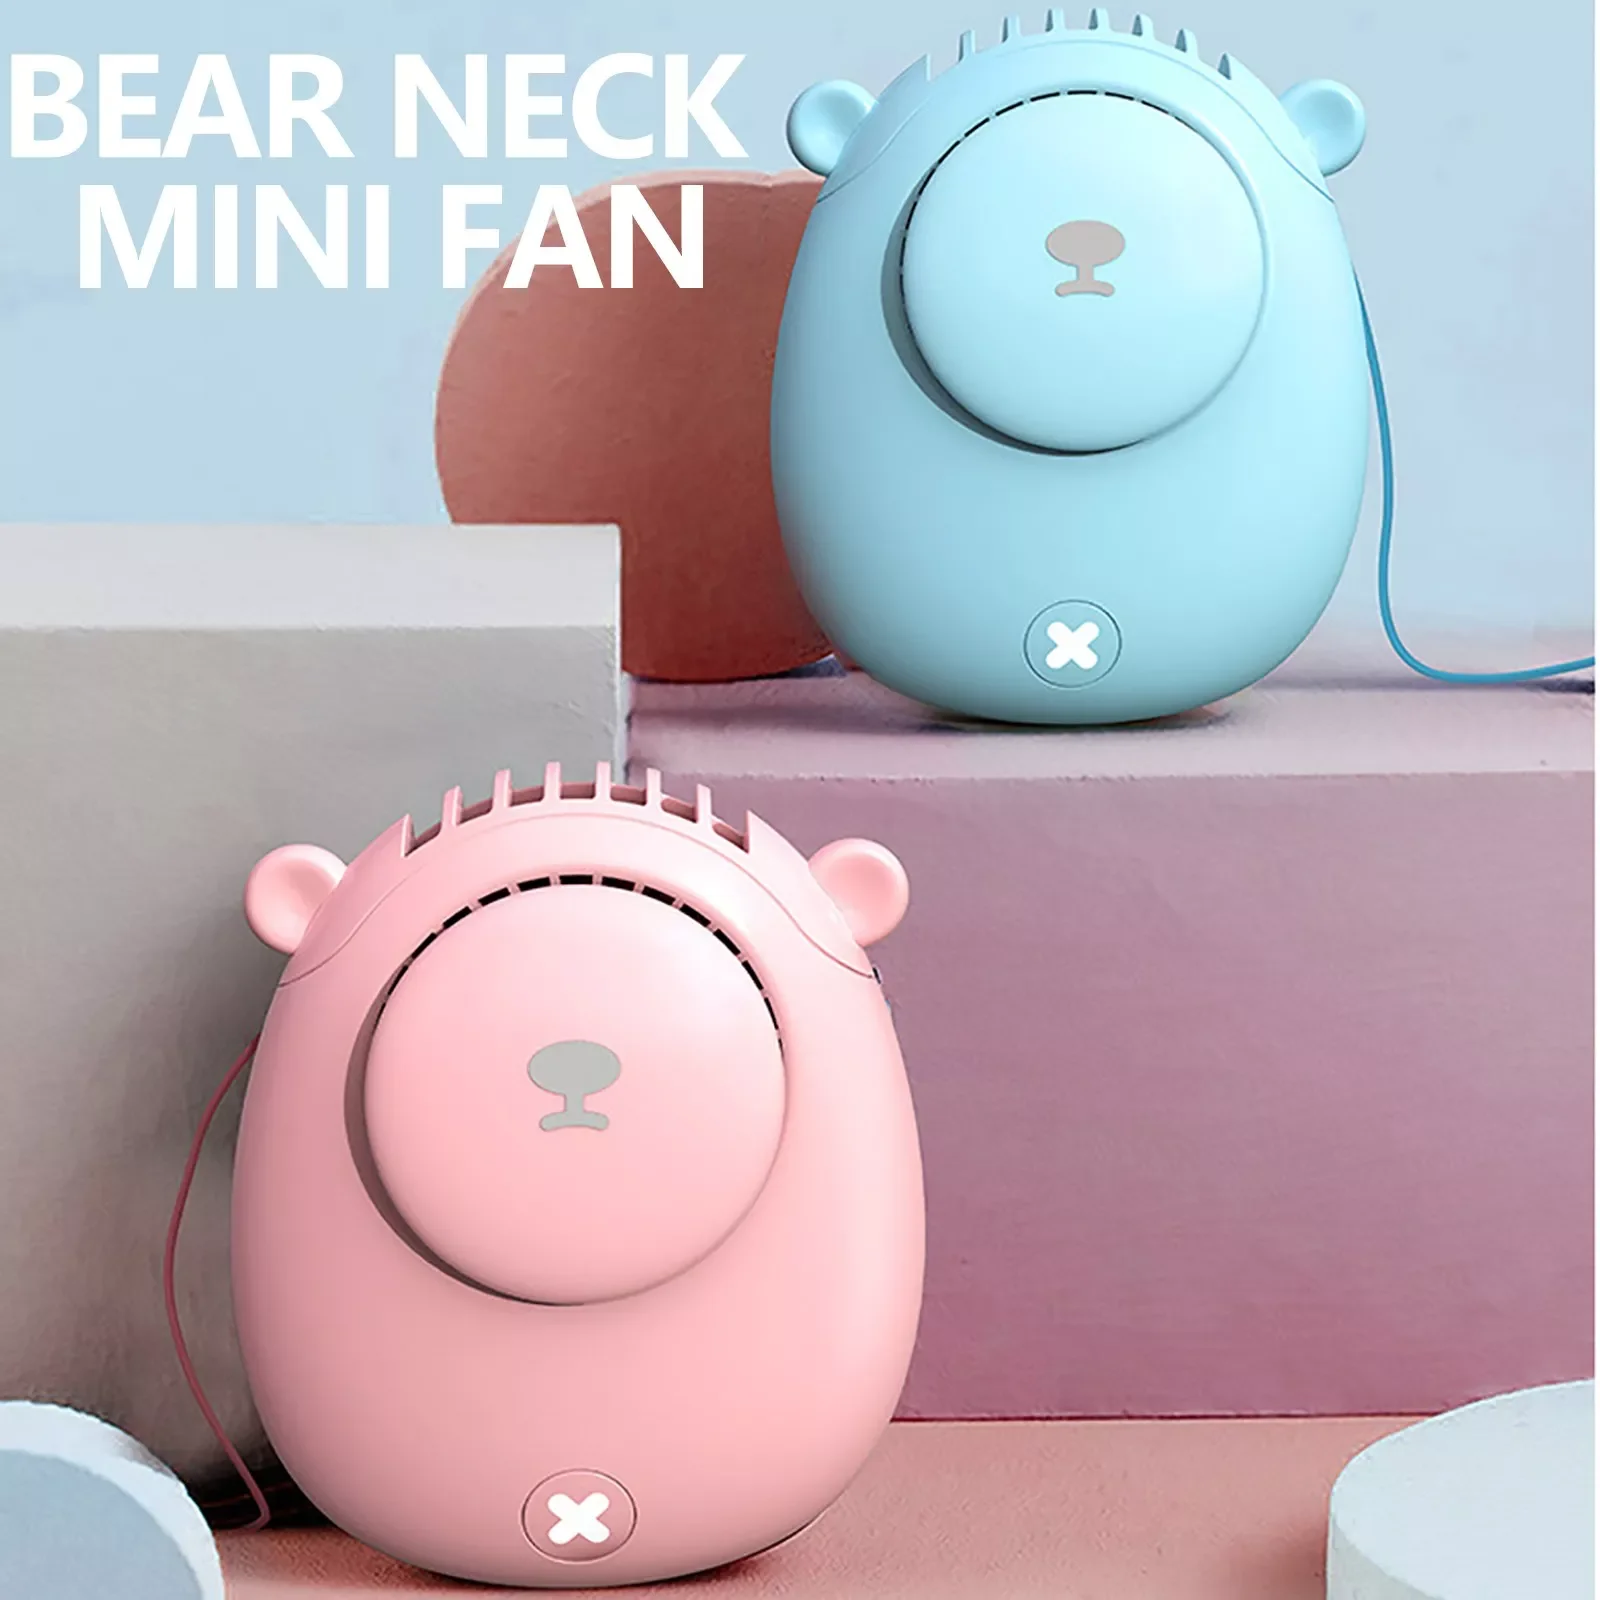 Neck Fan Portable Cute Bear Mini Fan Usb 5v Cooler Rechargeable Ventilador Outdoor Travel Handheld Silent Small Cooling Fans#dg4